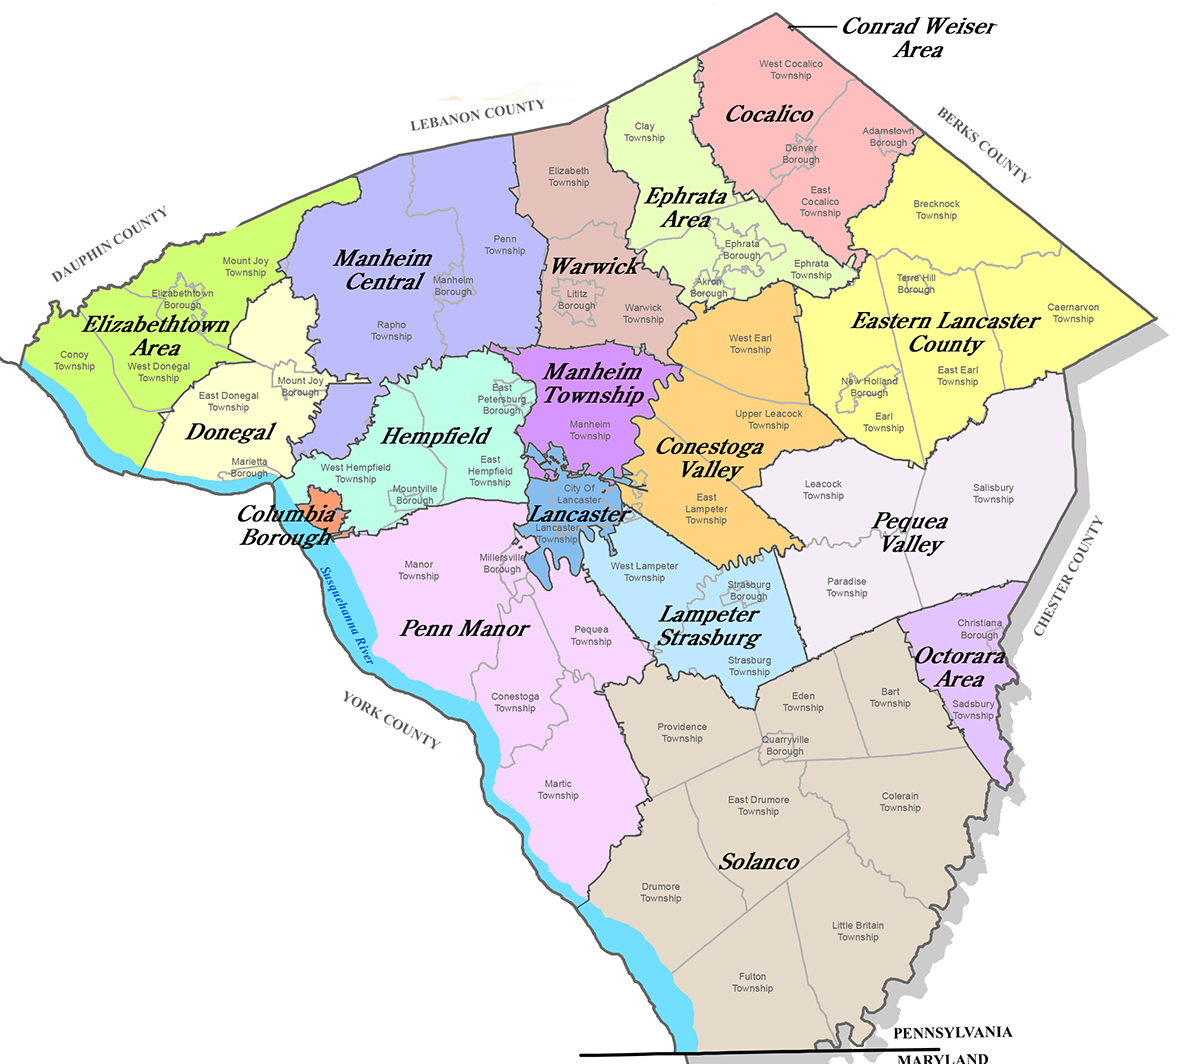 manheim township school district boundaries